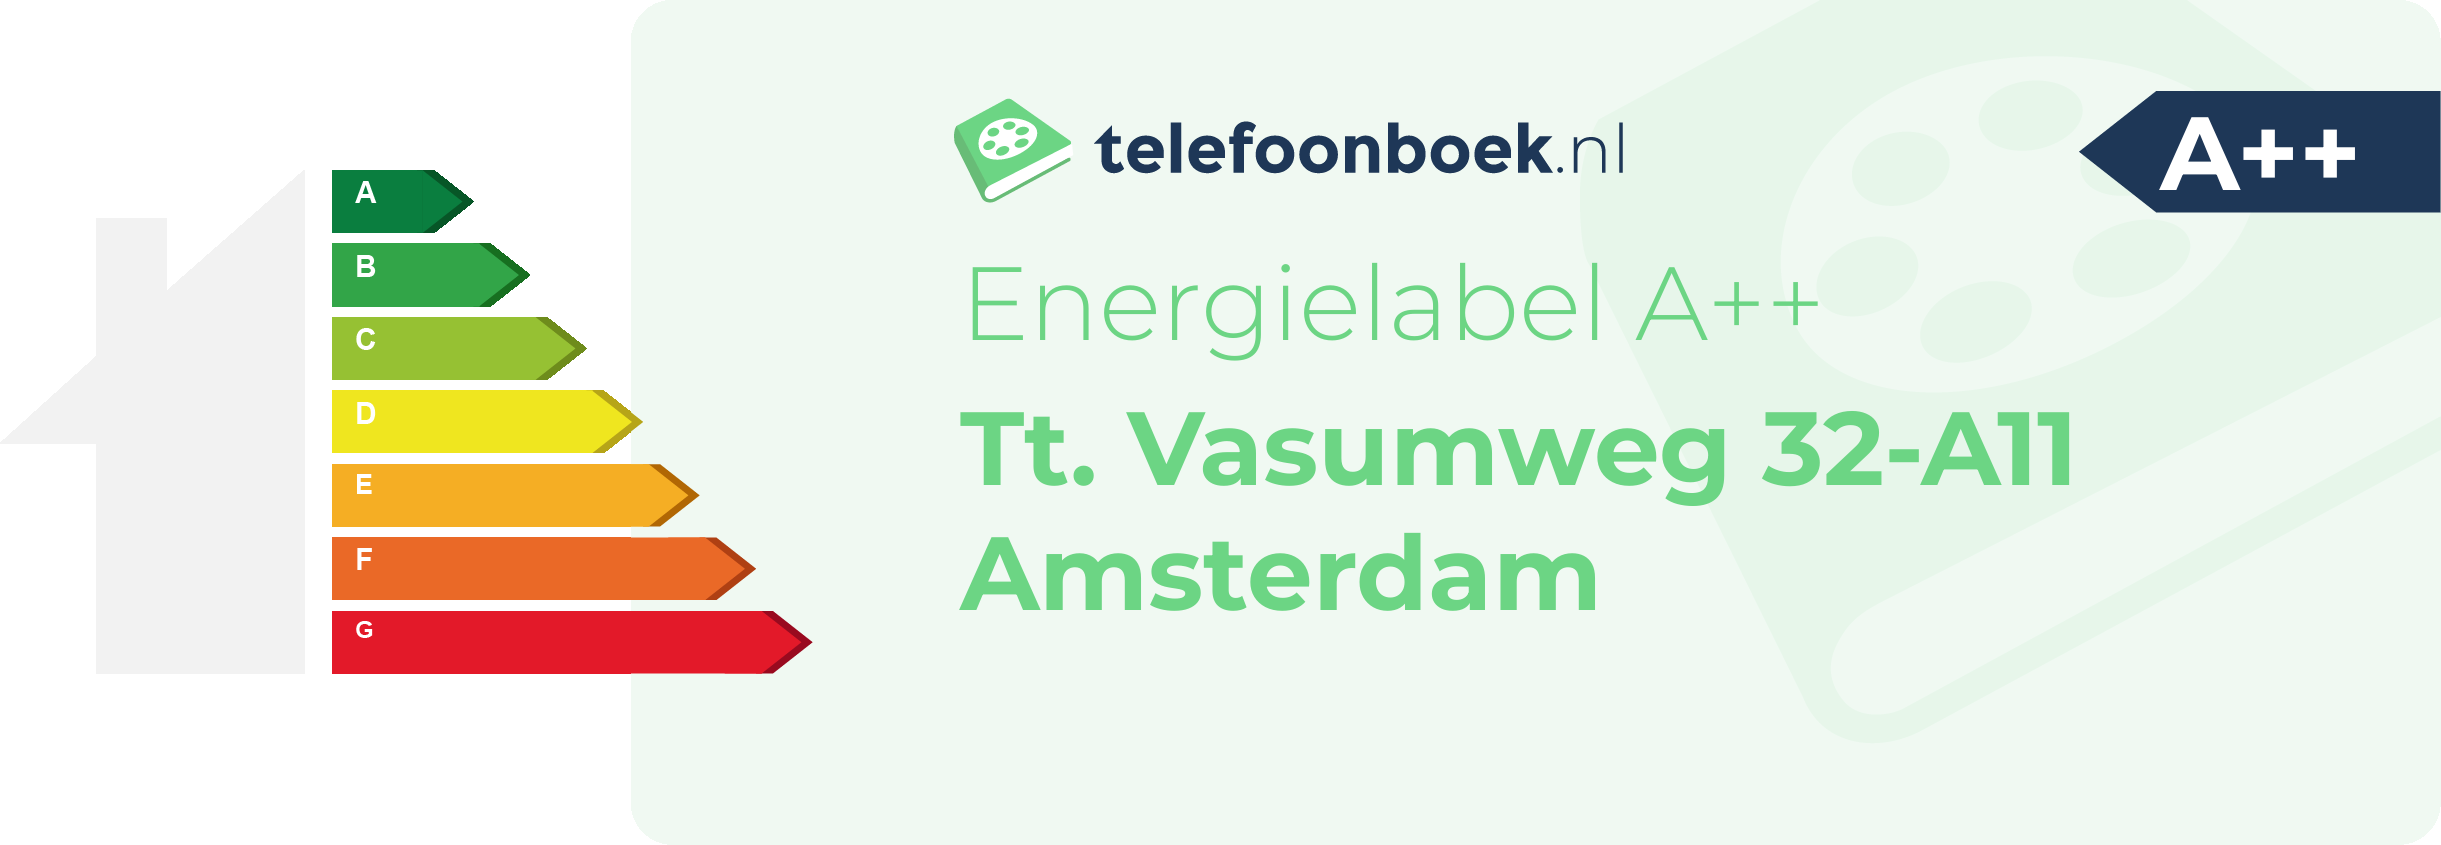 Energielabel Tt. Vasumweg 32-A11 Amsterdam